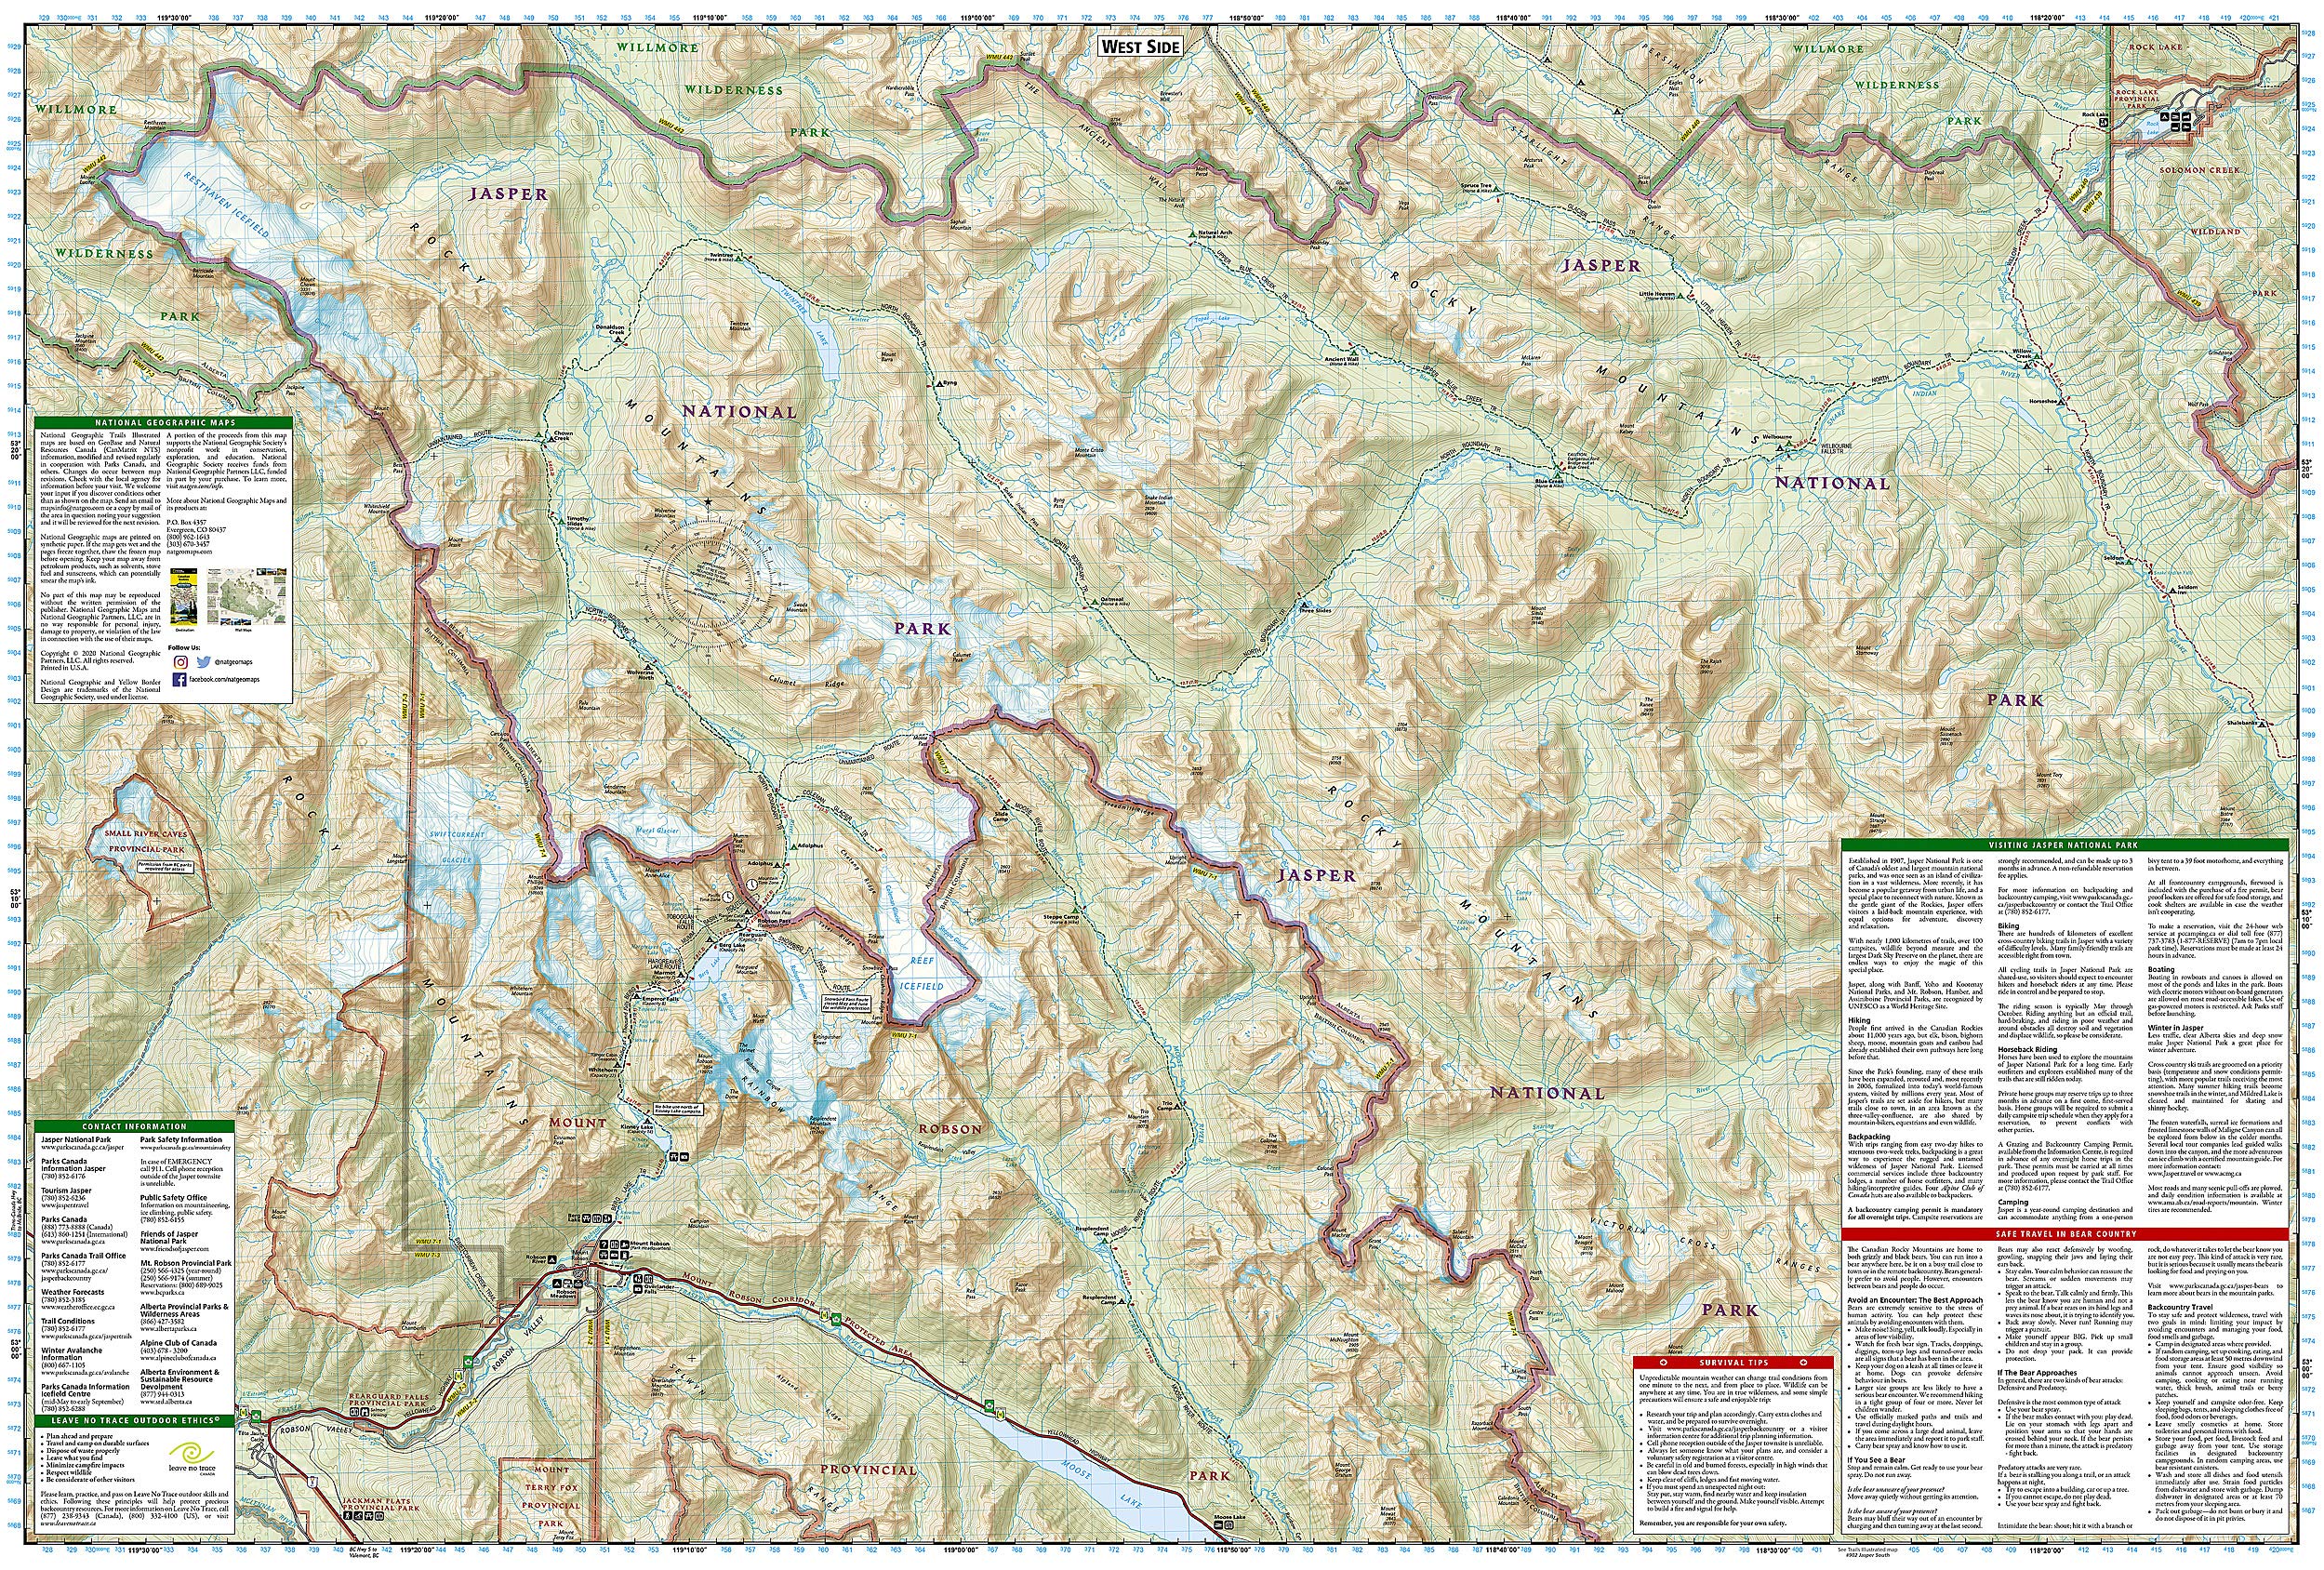 Jasper North Map [Jasper National Park] (National Geographic Trails Illustrated Map, 903)